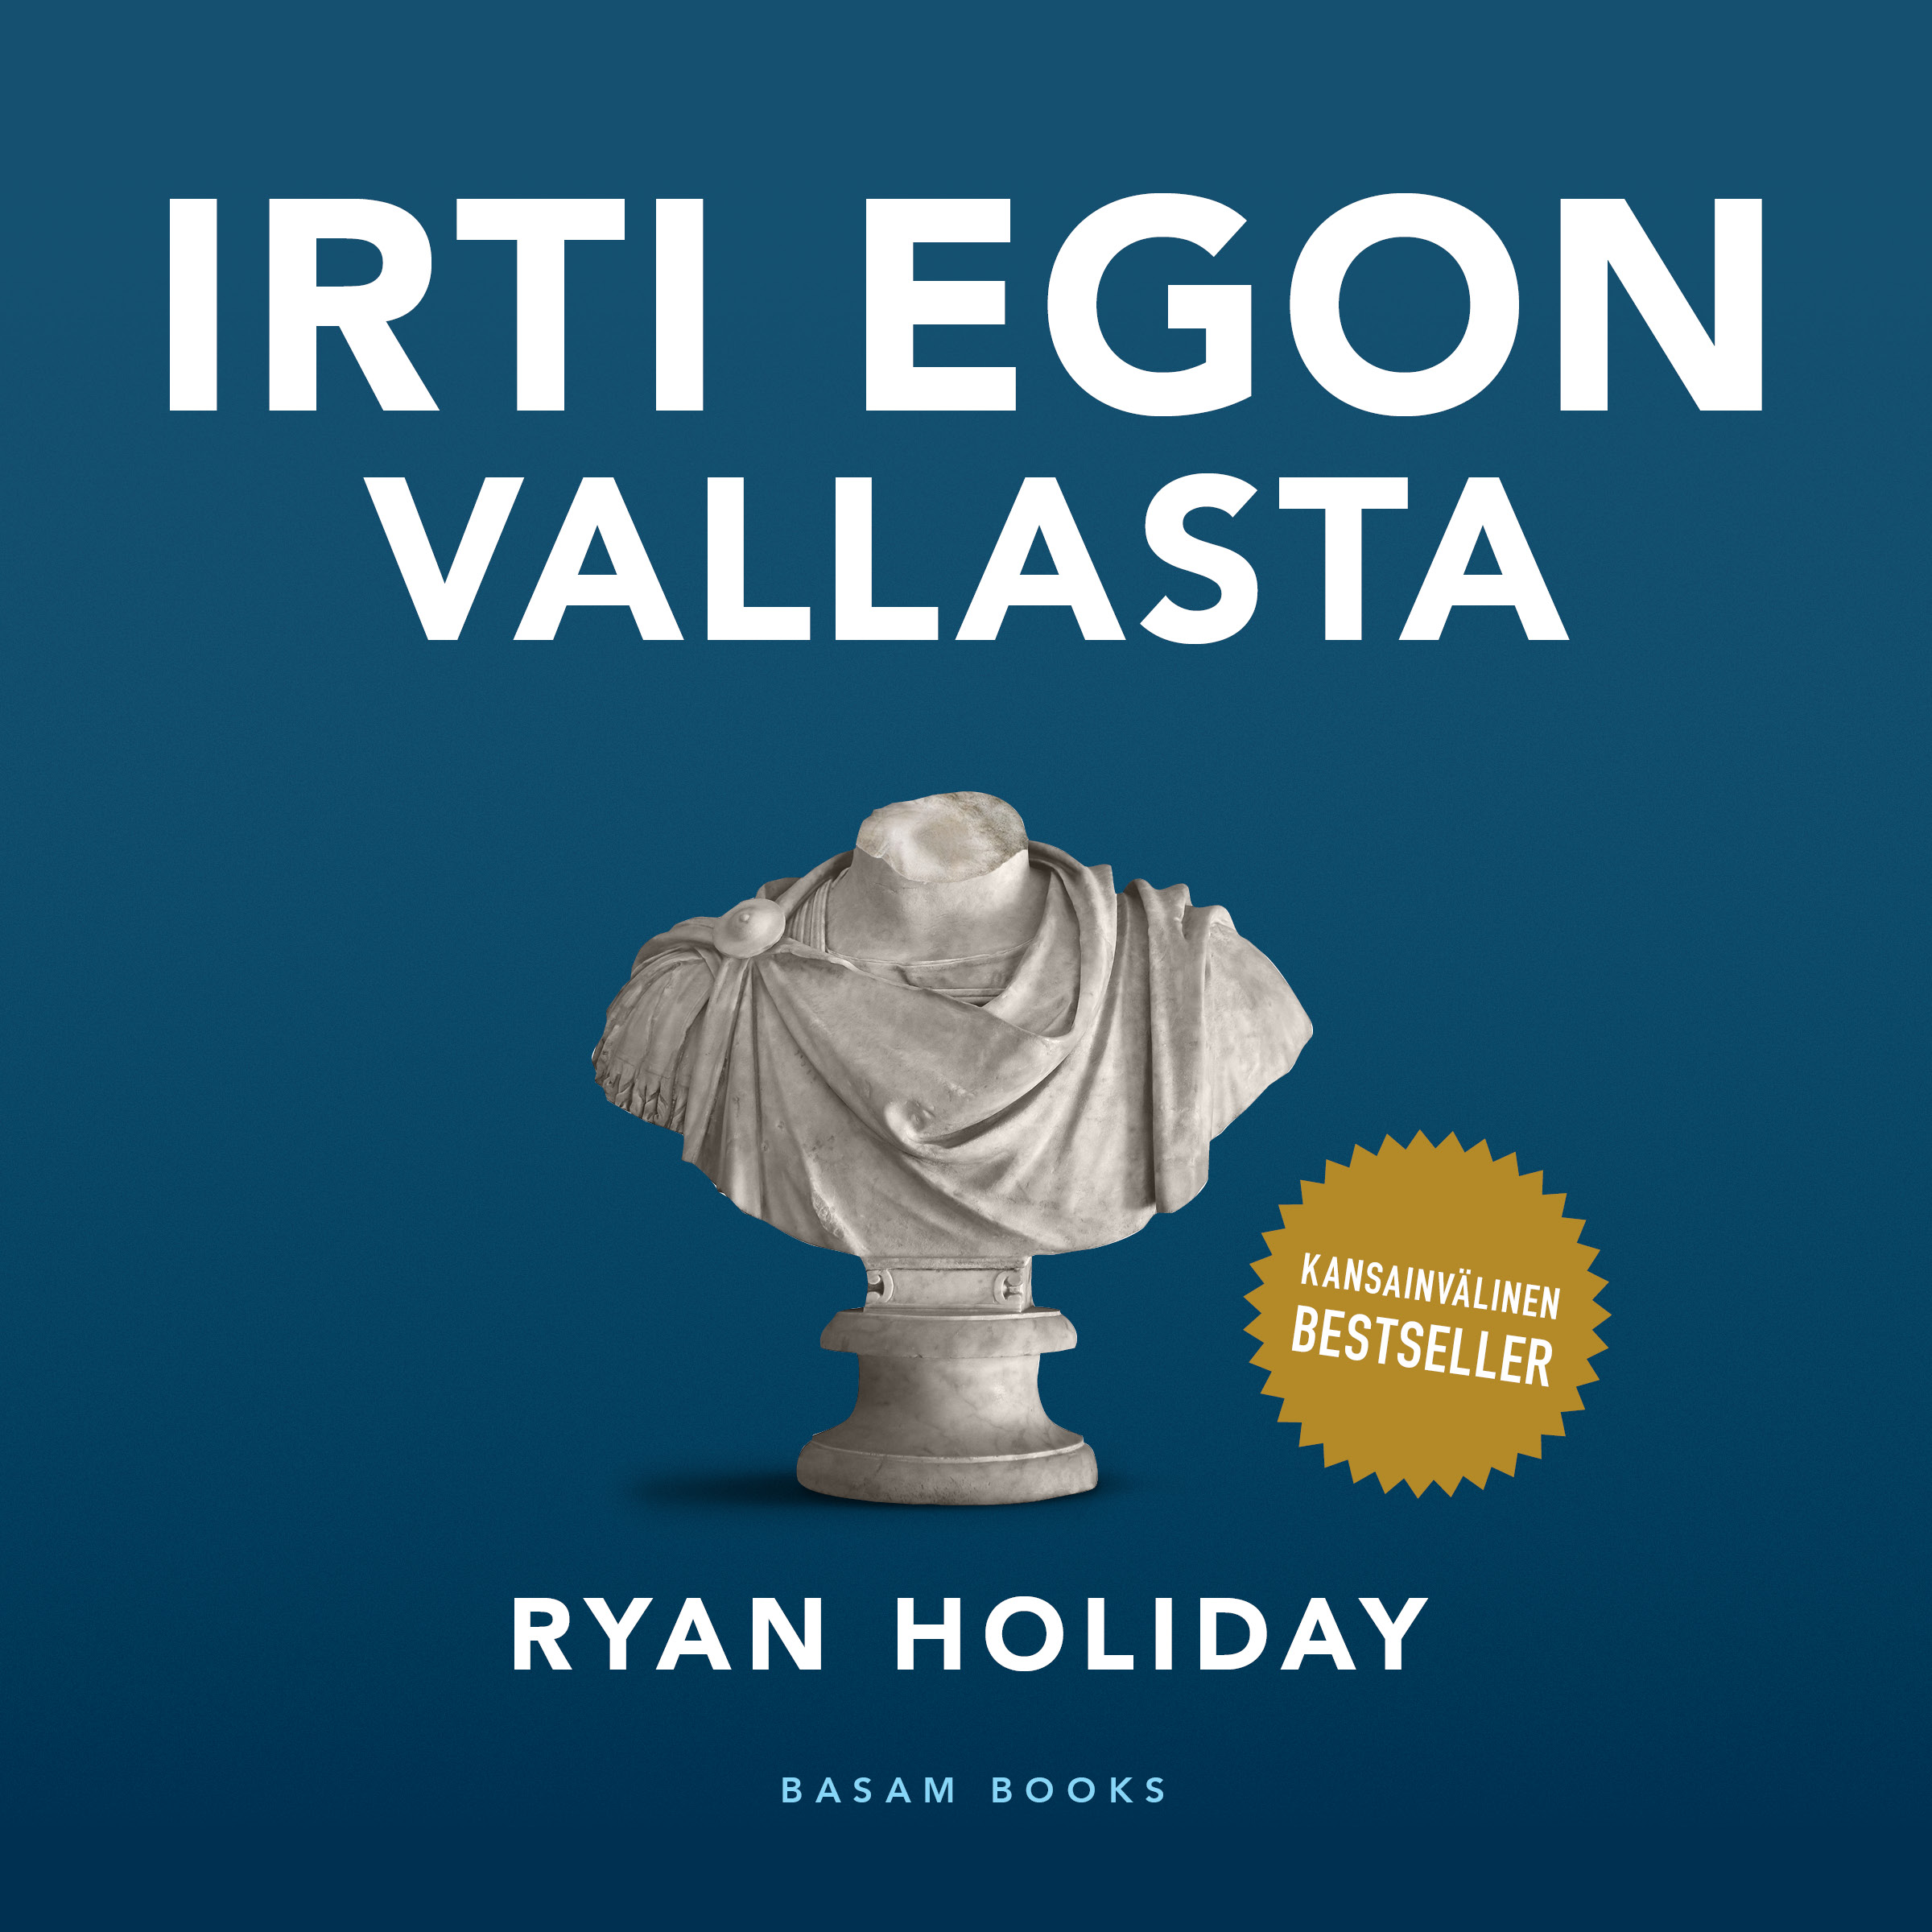 Holiday, Ryan - Irti egon vallasta, audiobook